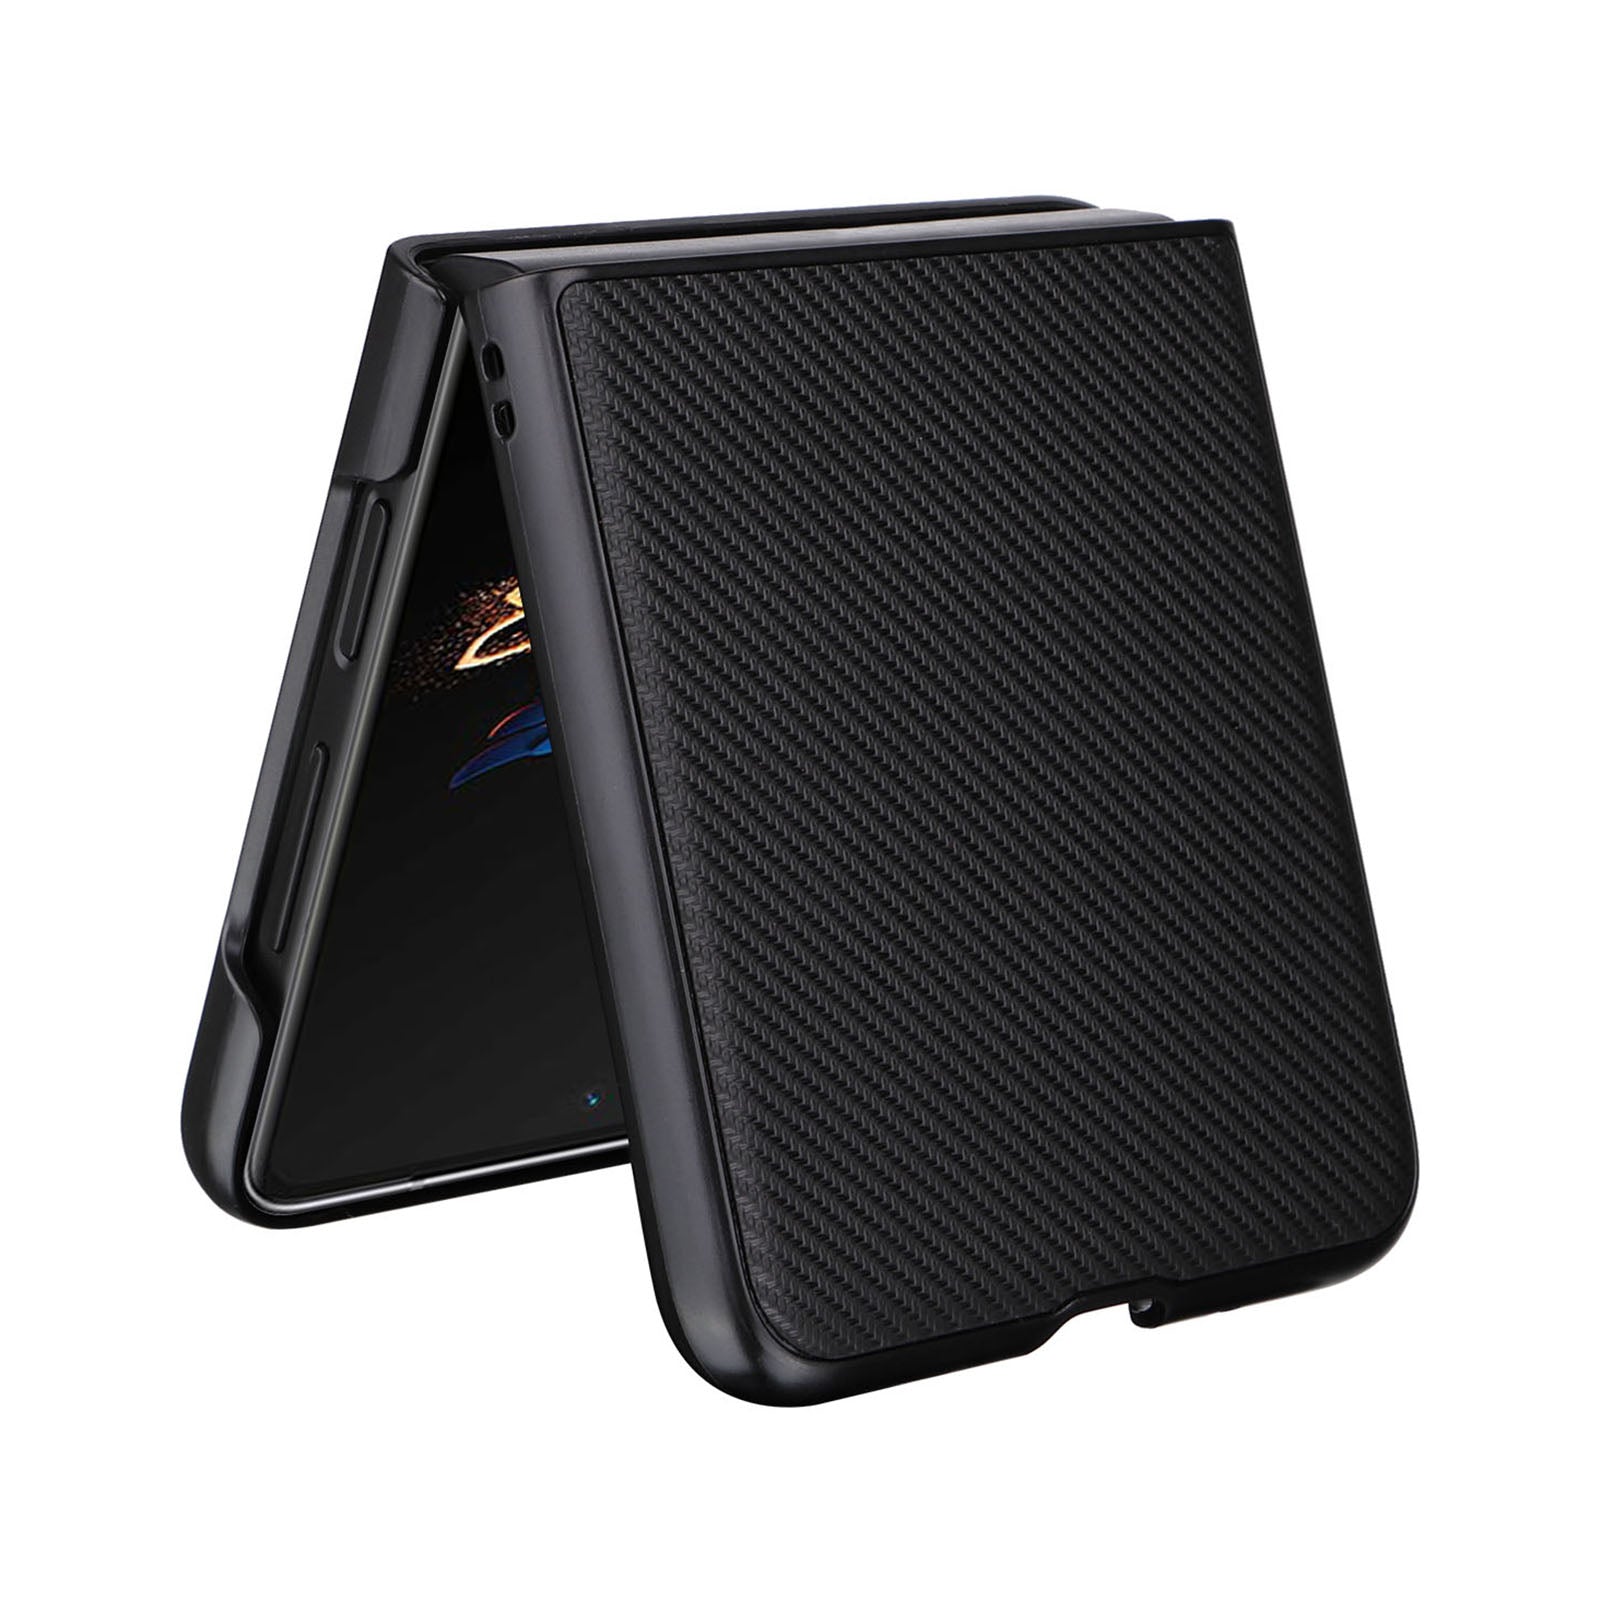 Uniqkart for Tecno Phantom V Flip Carbon Fiber Texture Case PU Leather Coated PC Anti-drop Phone Cover - Black